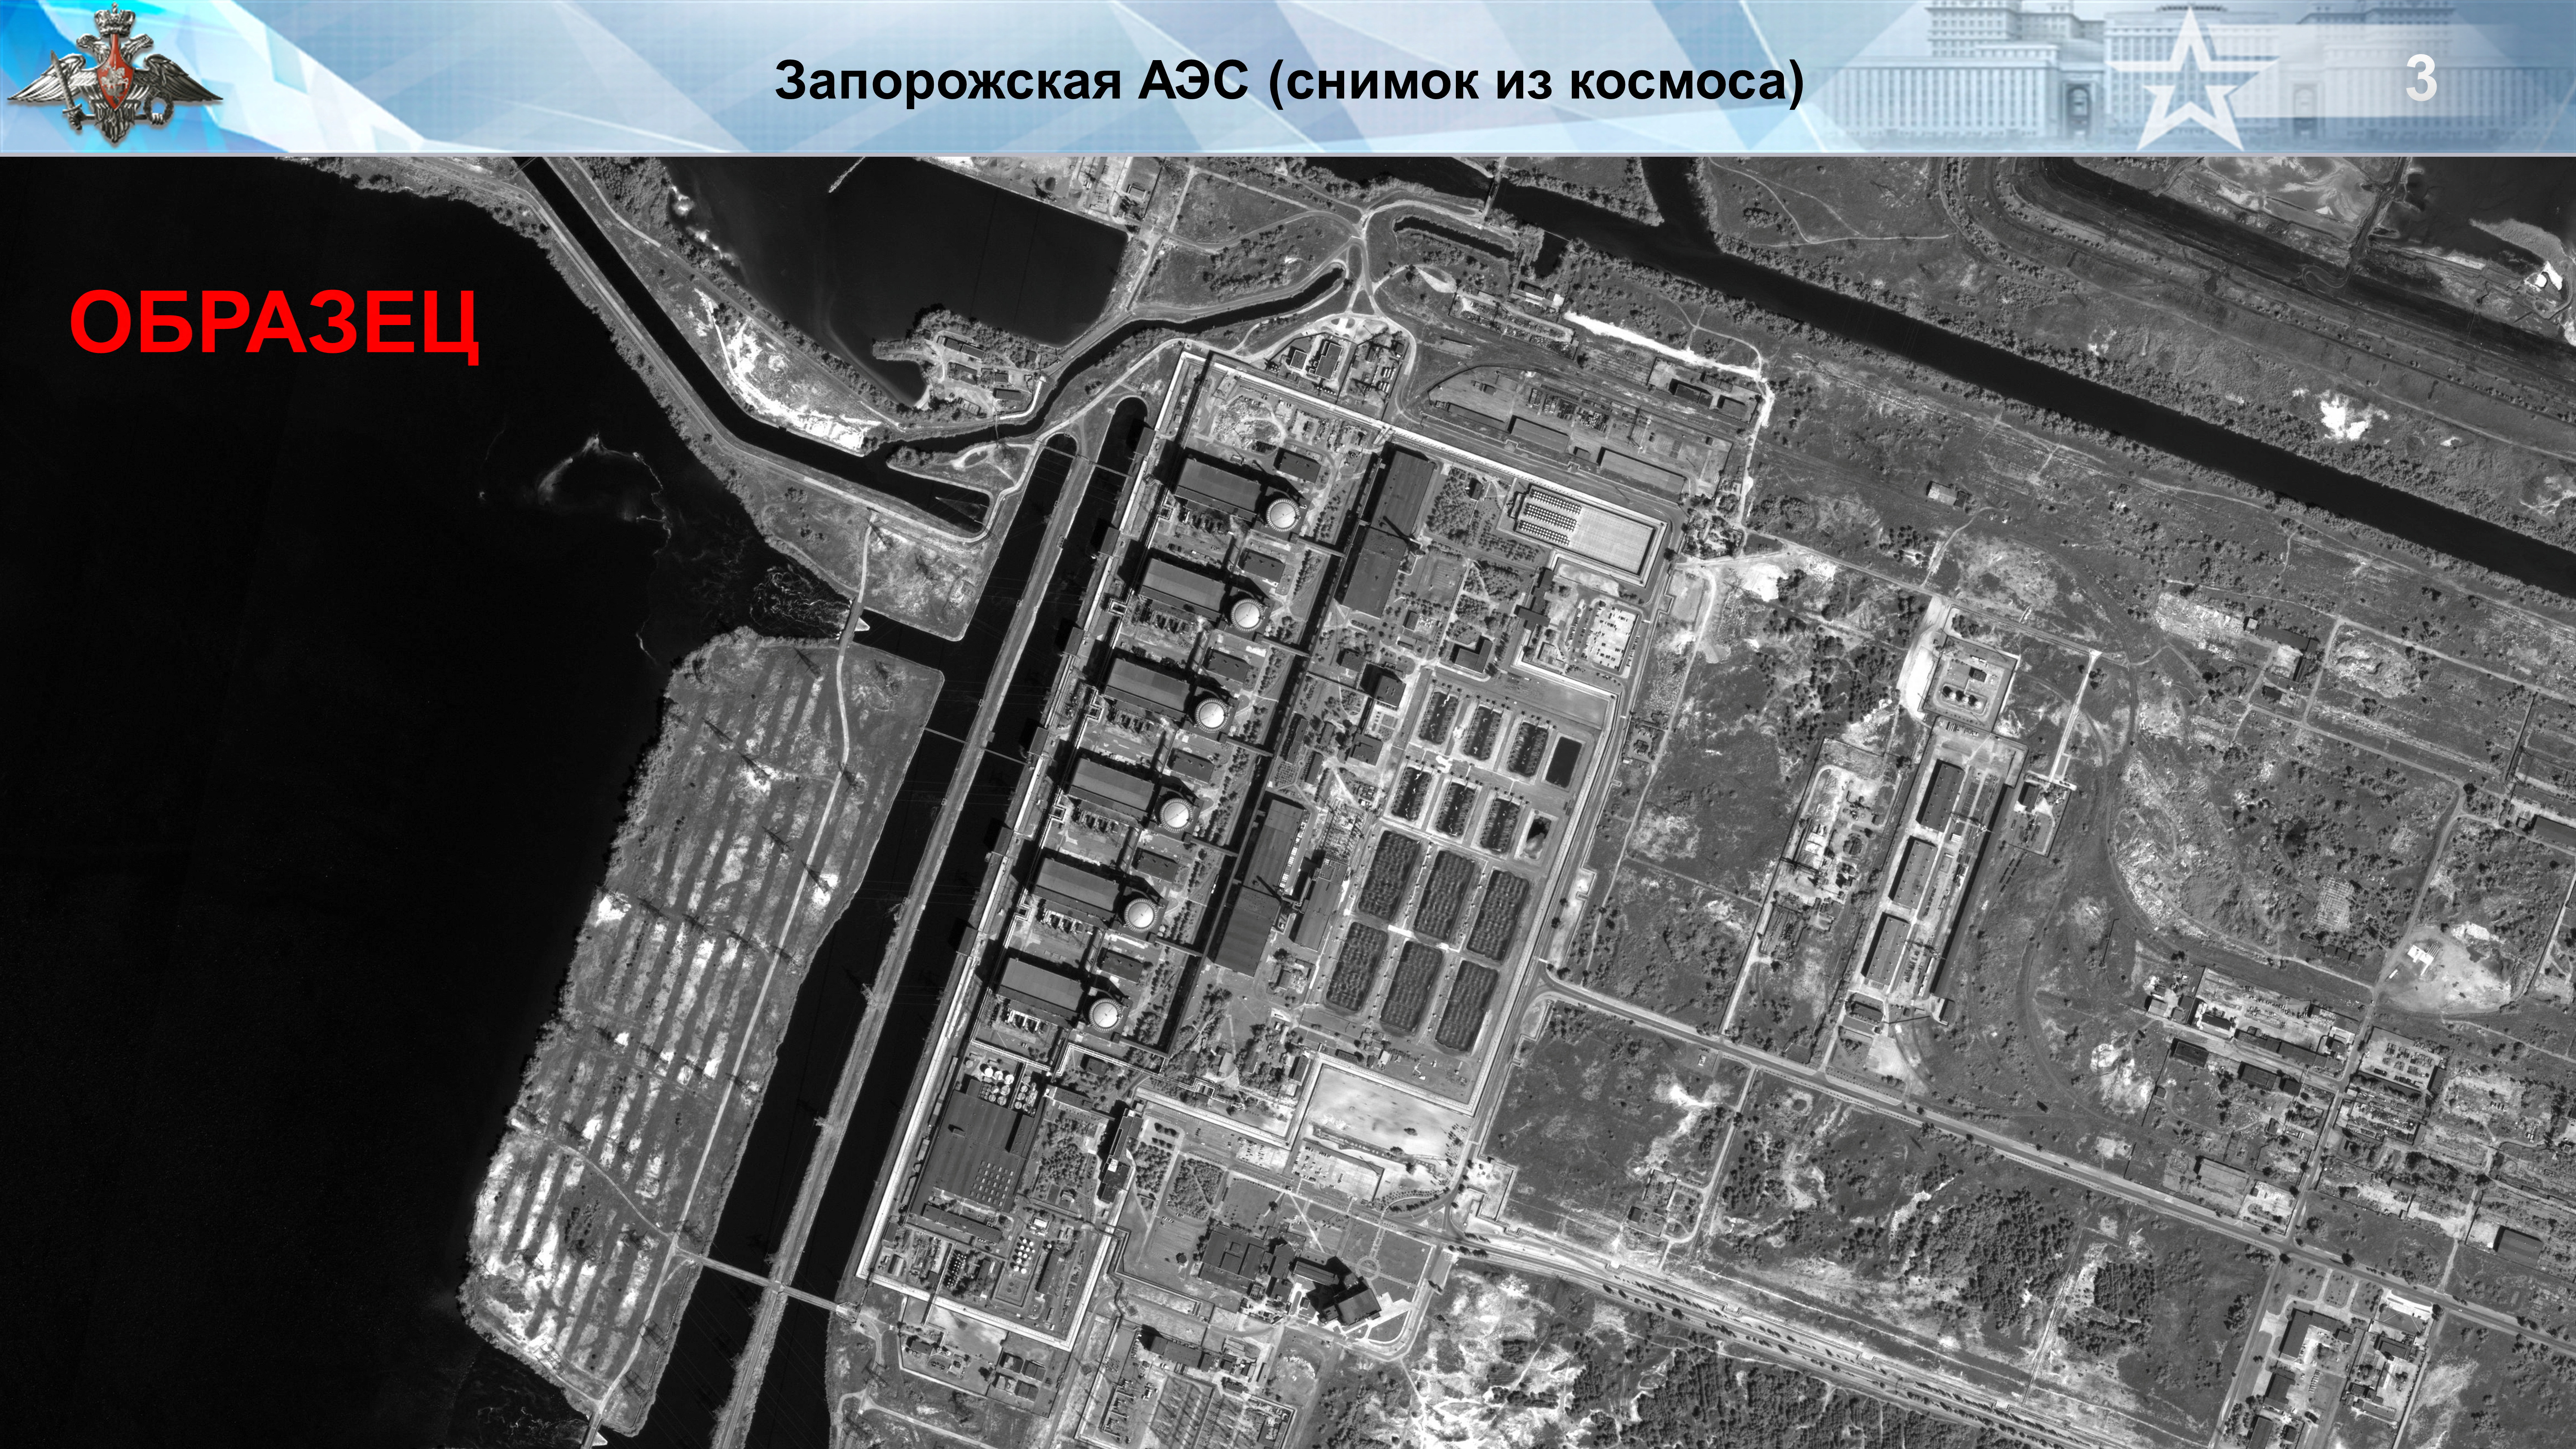 An overview of the Zaporizhzhia Nuclear Power Plant, outside the city of Enerhodar in the Zaporizhzhia region,